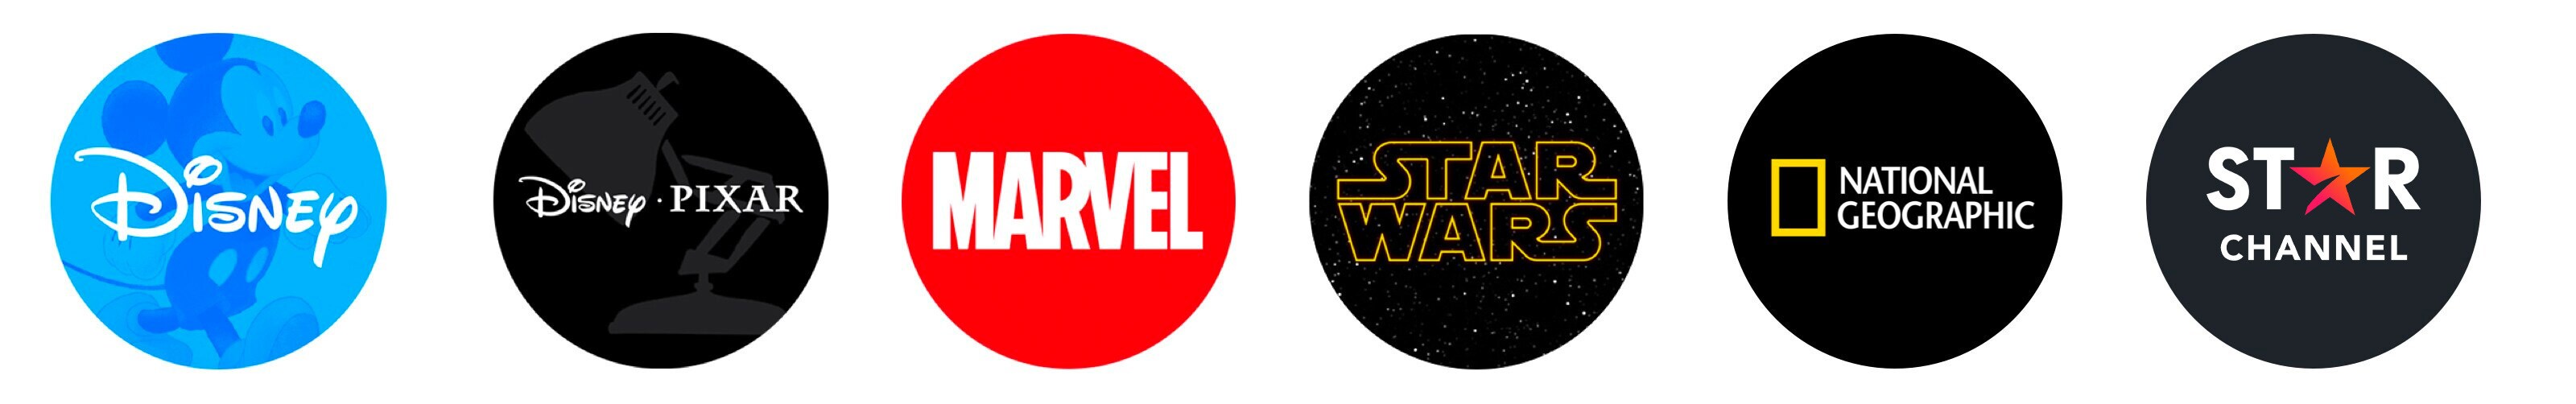 Nuestras marcas, Disney, Pixar, Marvel, Star Wars, National Geographic, Fox